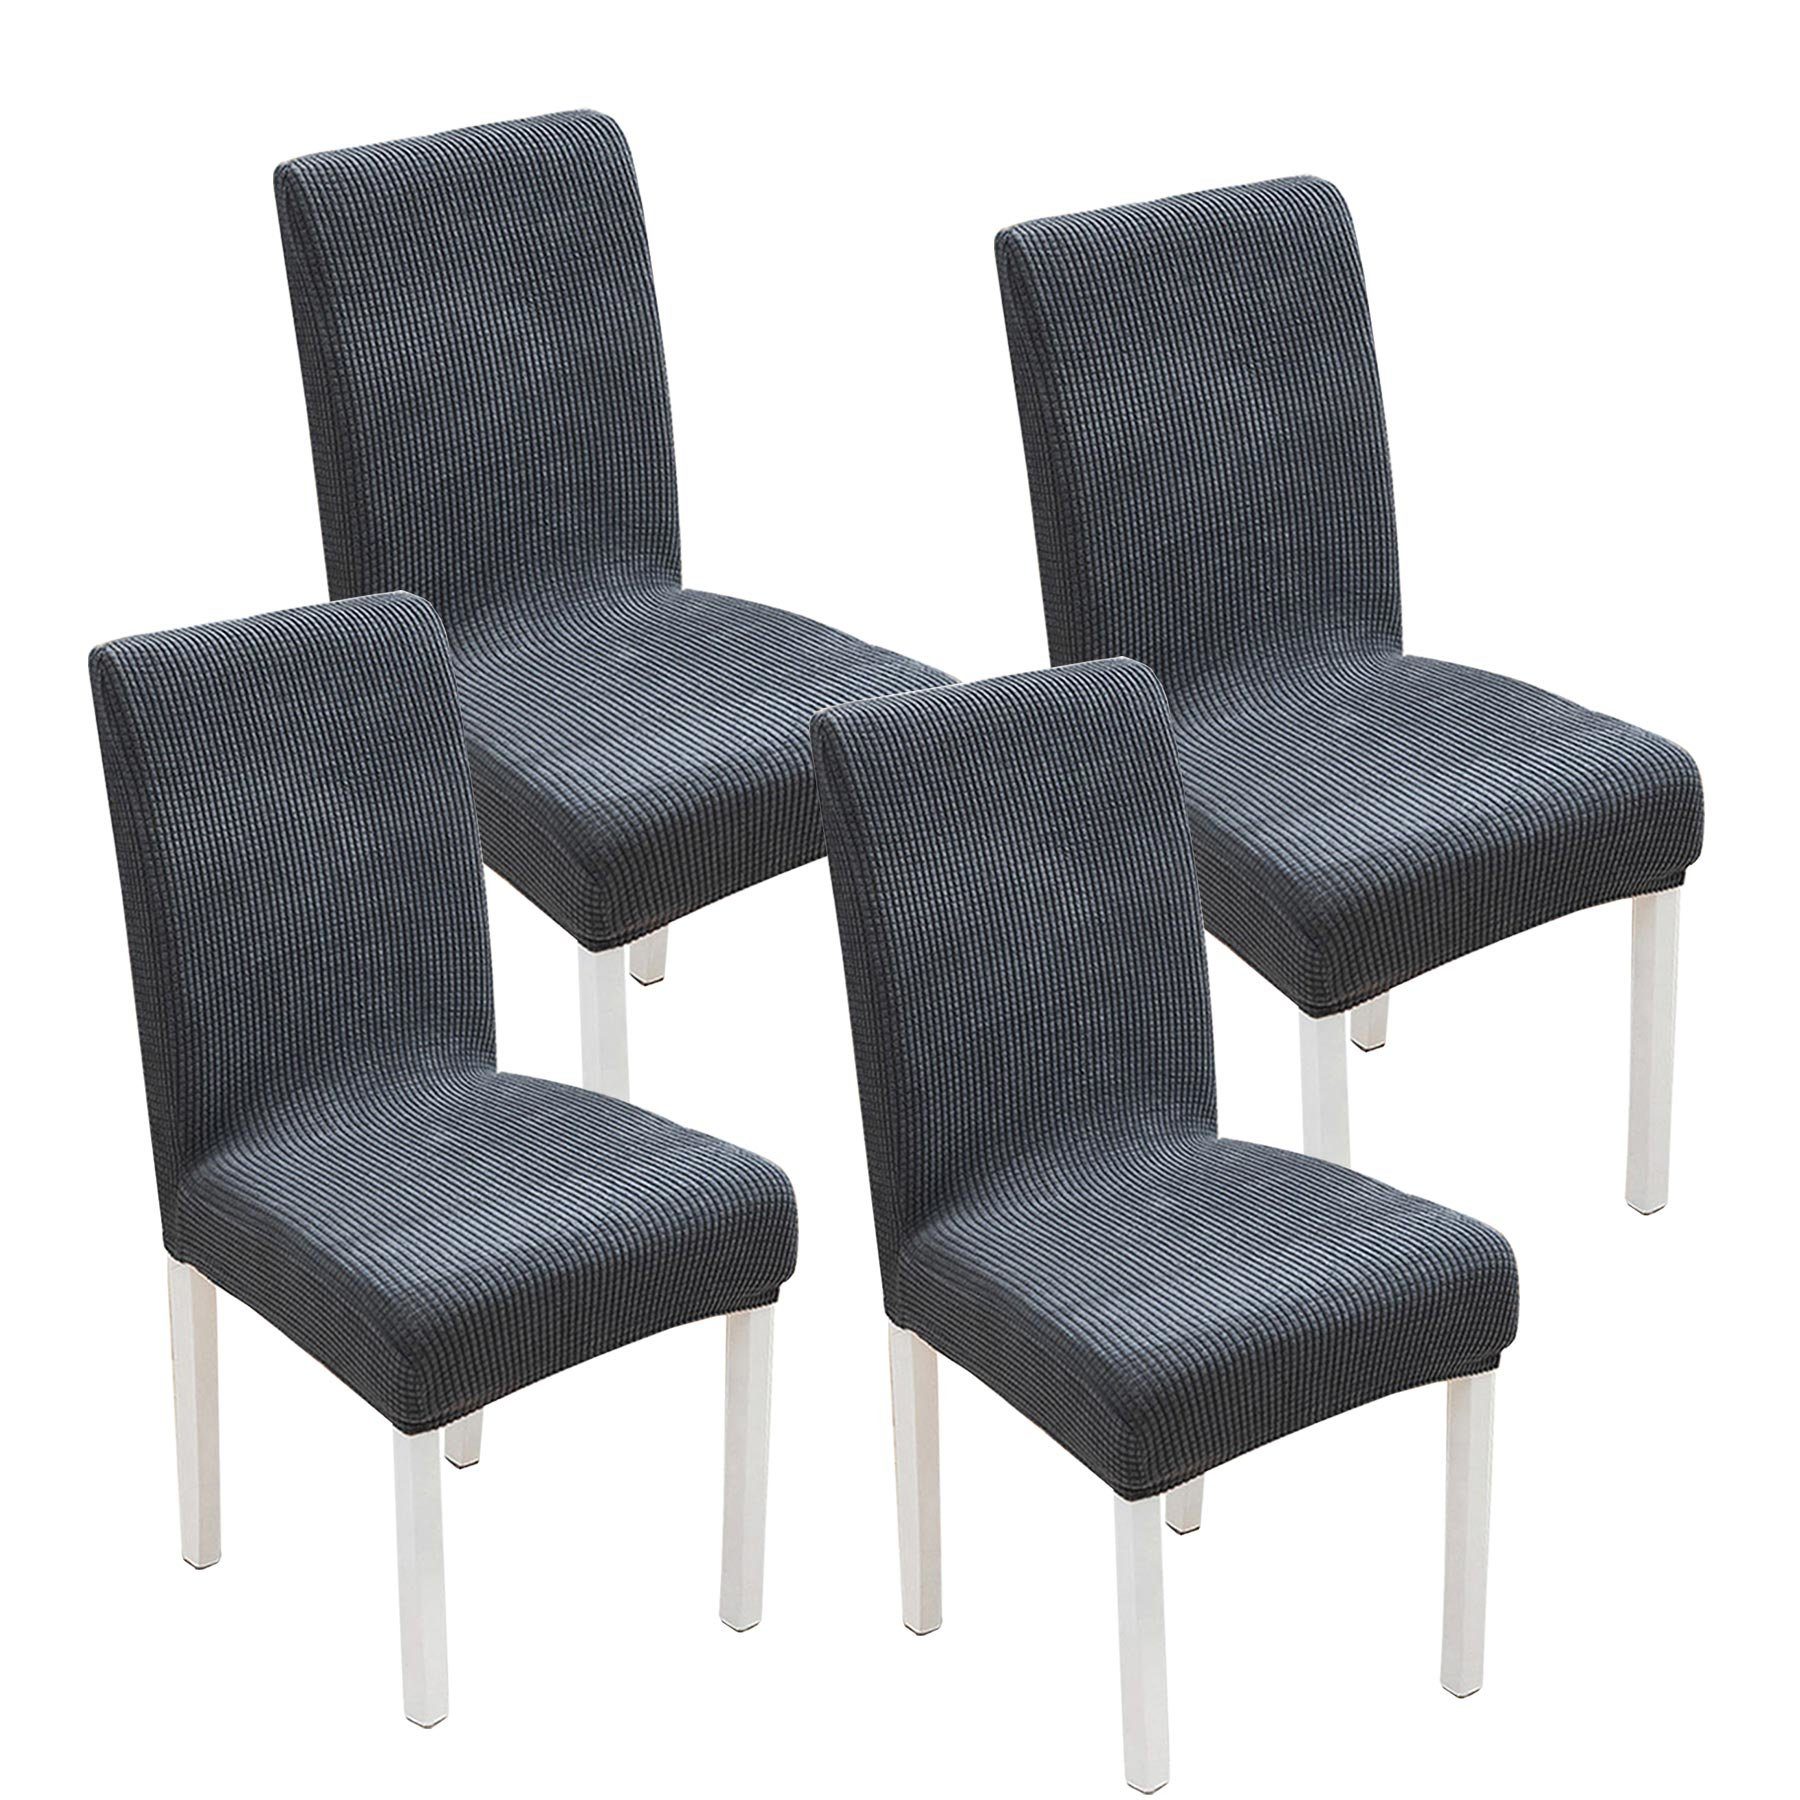 Sitzflächenhusse Universal Stuhlbezug Stretch Stuhl hussen Hochwertiger Stretchstoff, 7Magic, Stretch-Stuhlhussen, abnehmbar, waschbar,4er-set Dunkelgrau|M